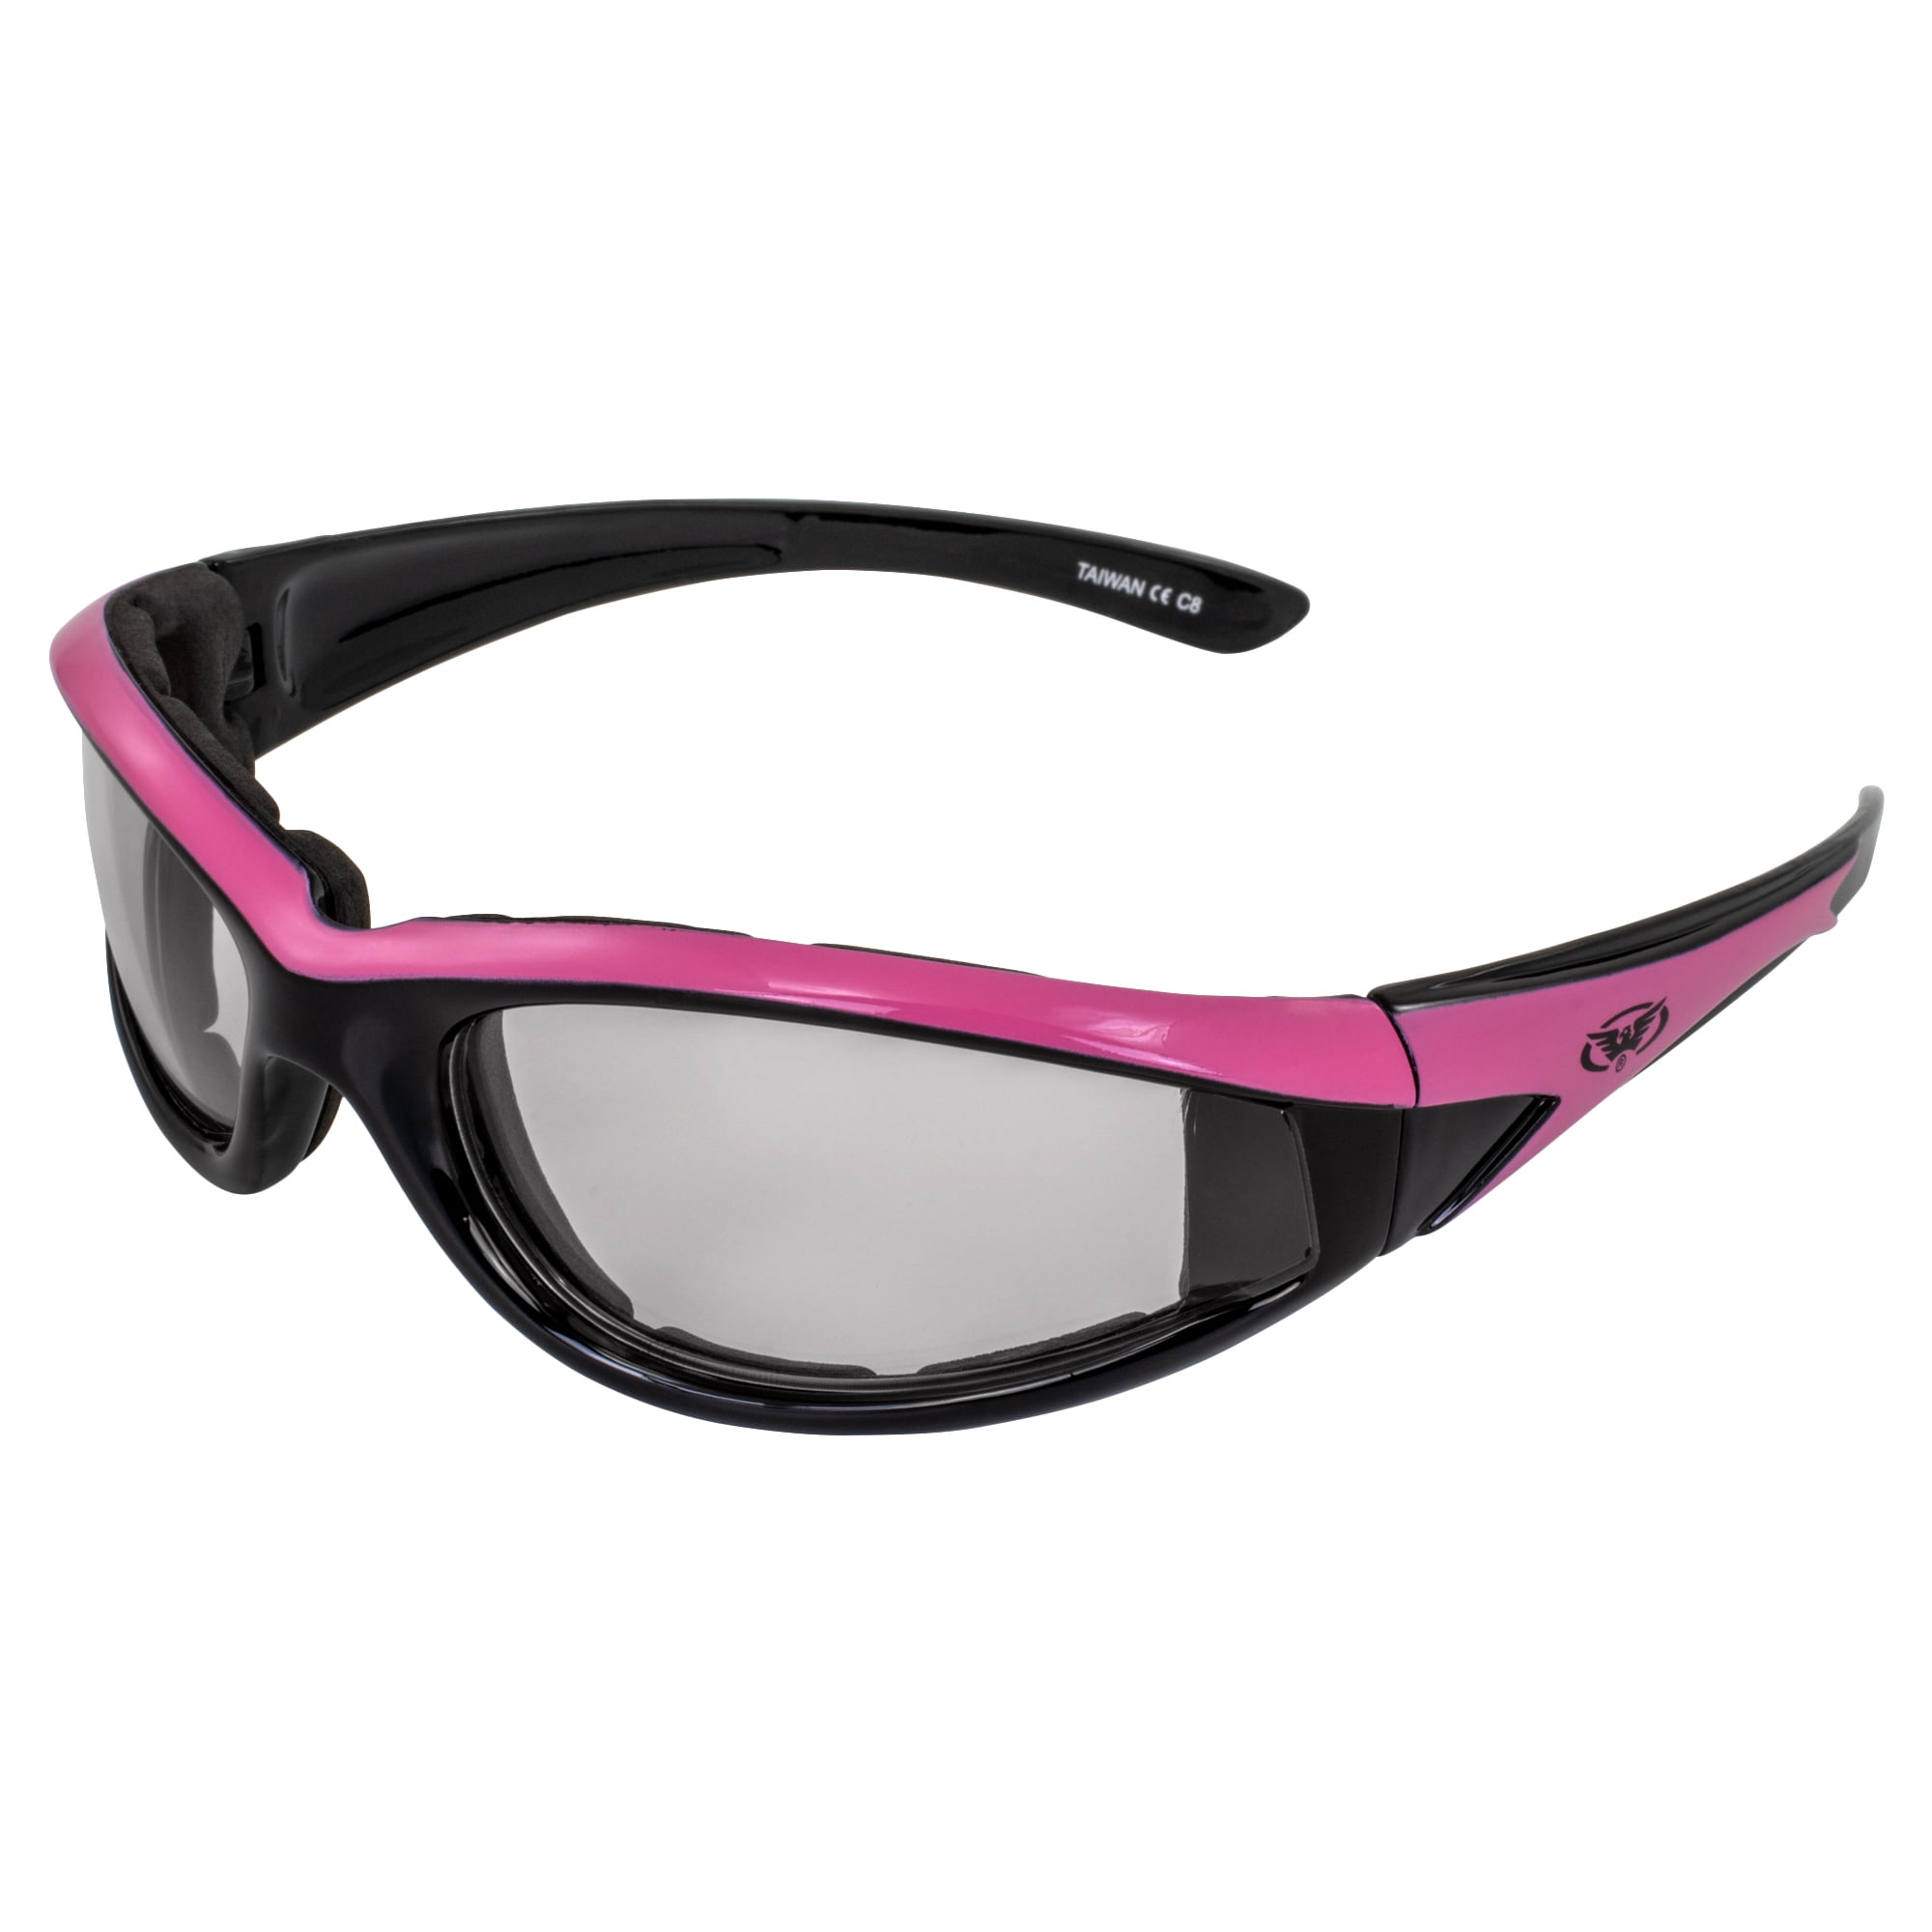 SASA Hawkeye Sports, adventure and outdoor sunglasses. - Men